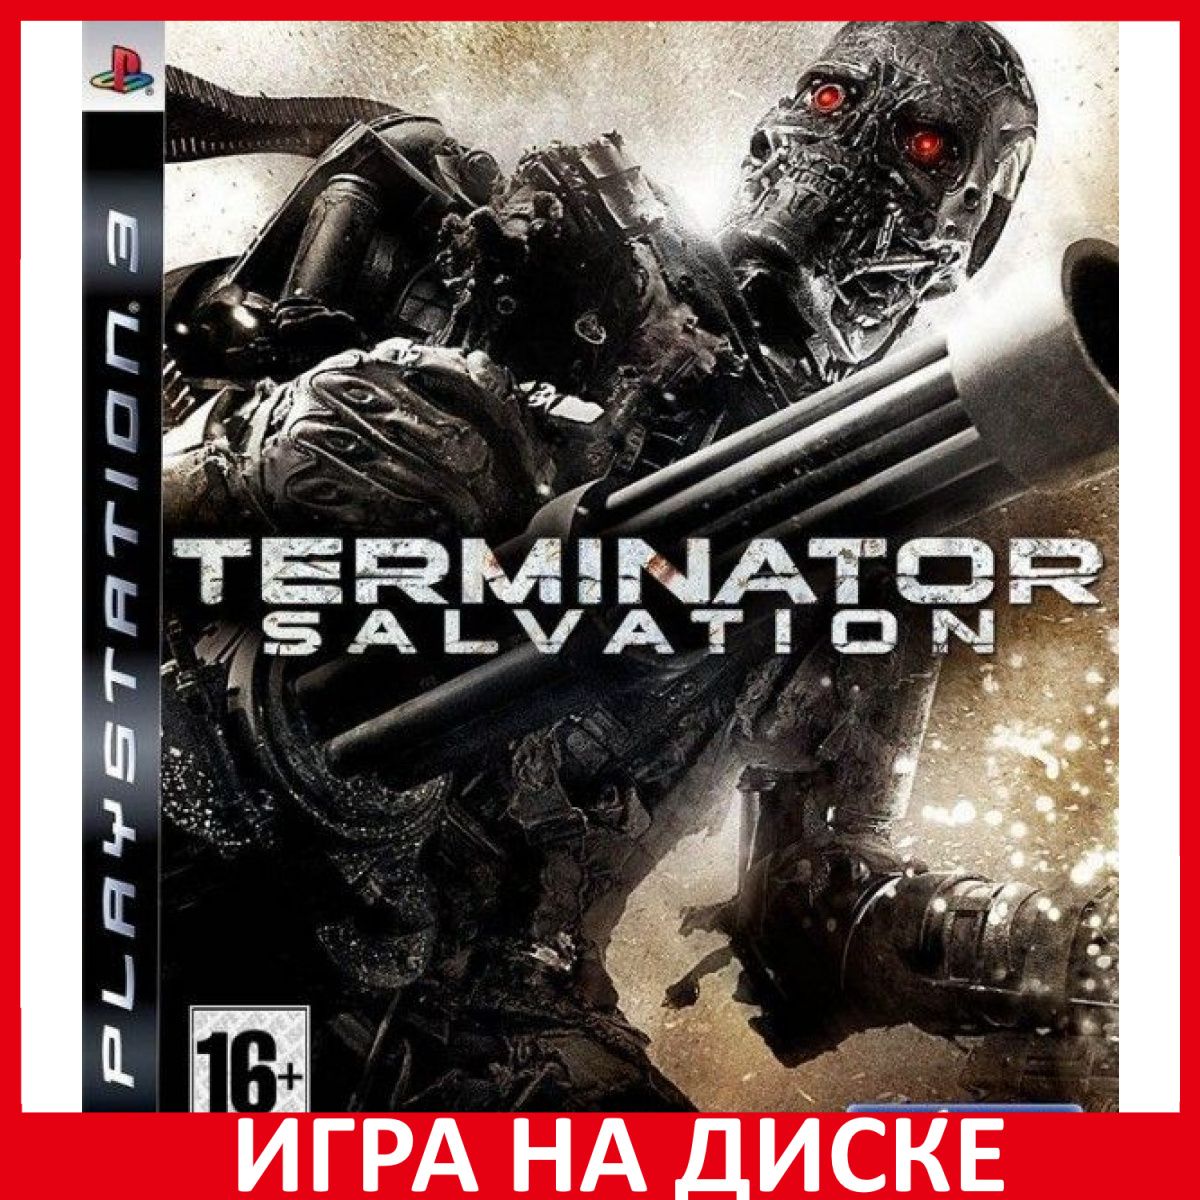  Terminator: Salvation - Playstation 3 : Video Games